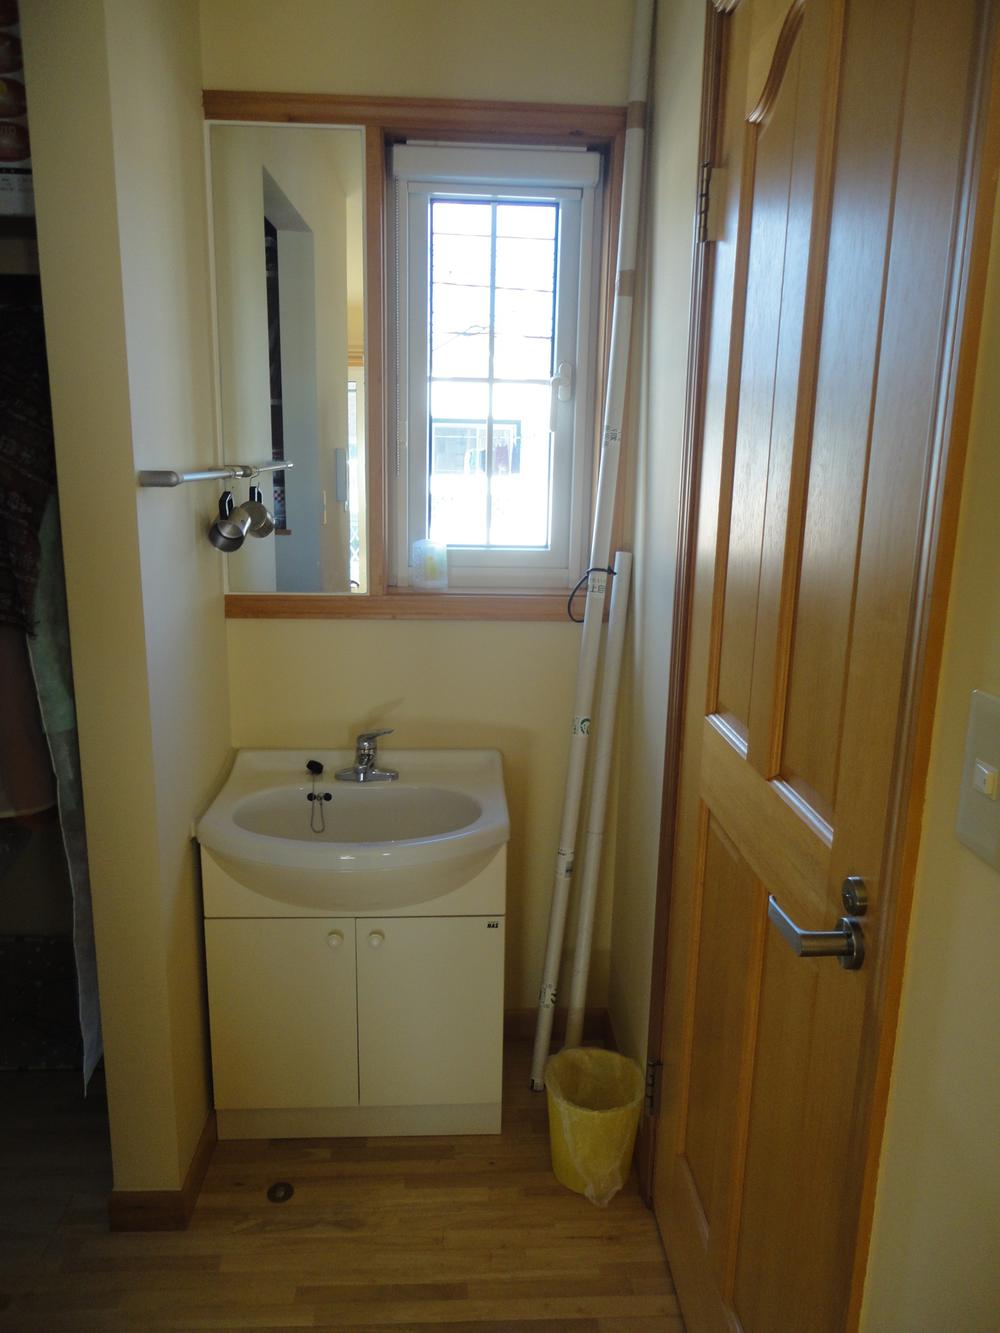 Wash basin, toilet. Washroom (2013 November shooting)